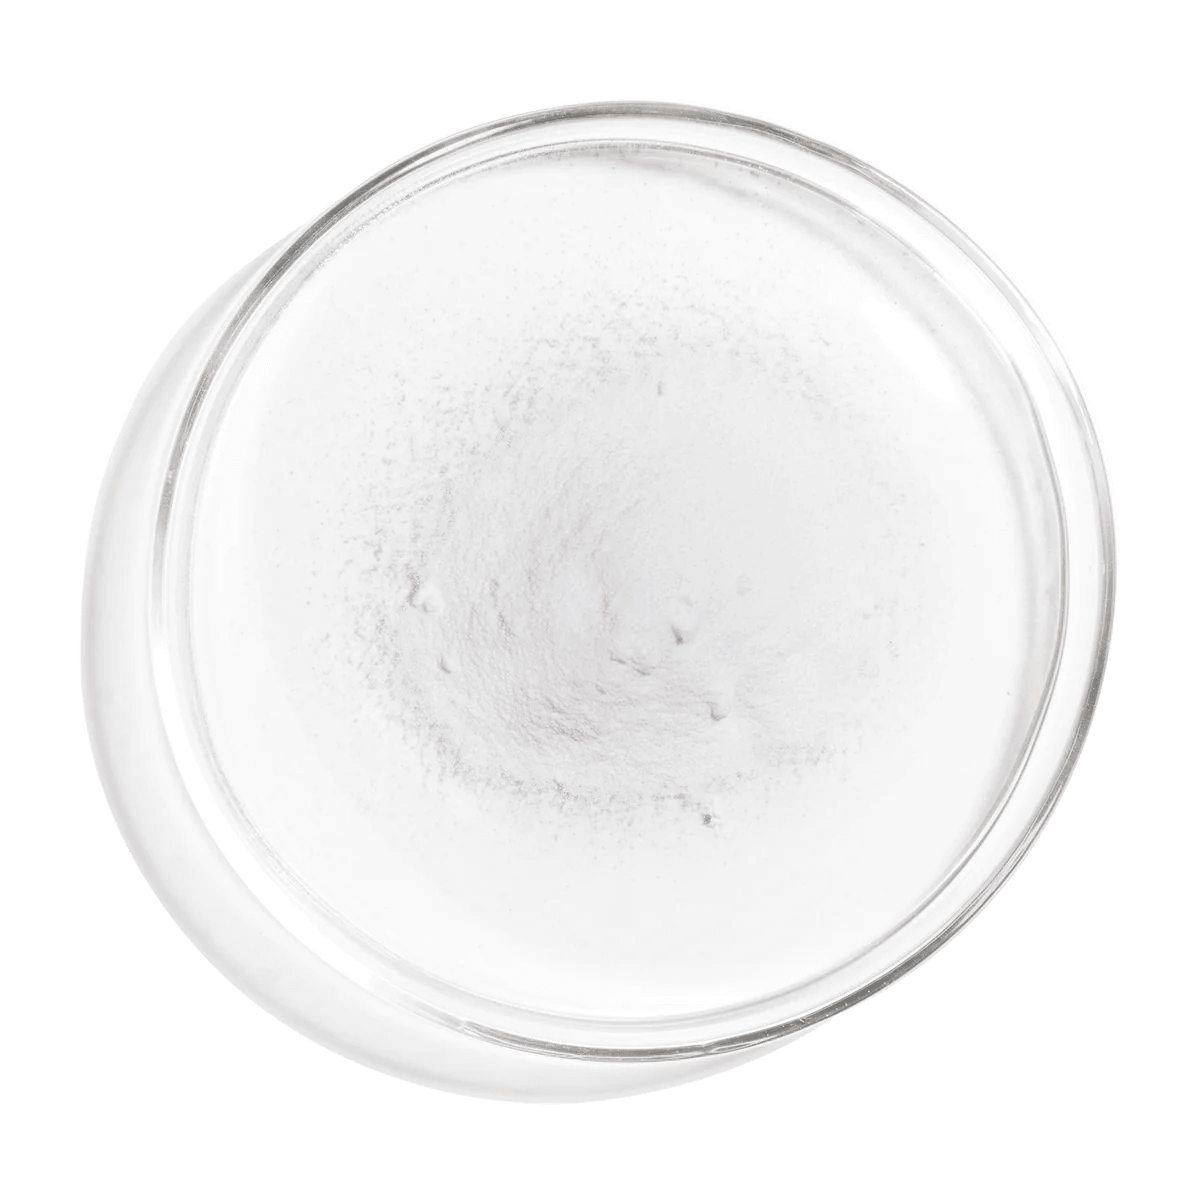 Ordinary 100% Niacinamide Powder 20g - Kenya